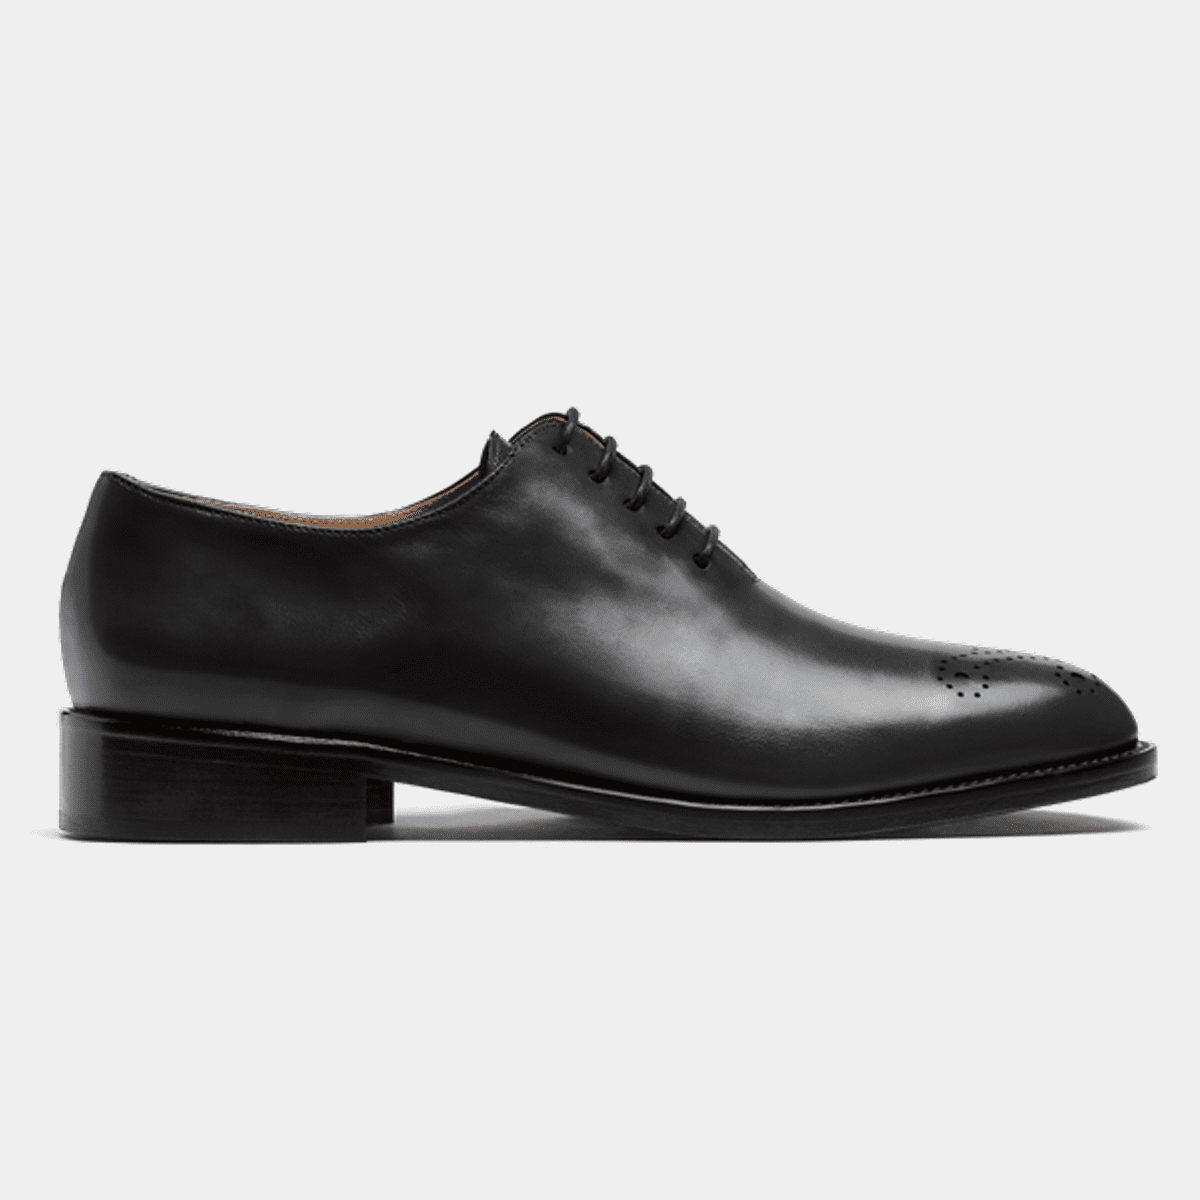 Wholecut Oxfords - black italian calf leather